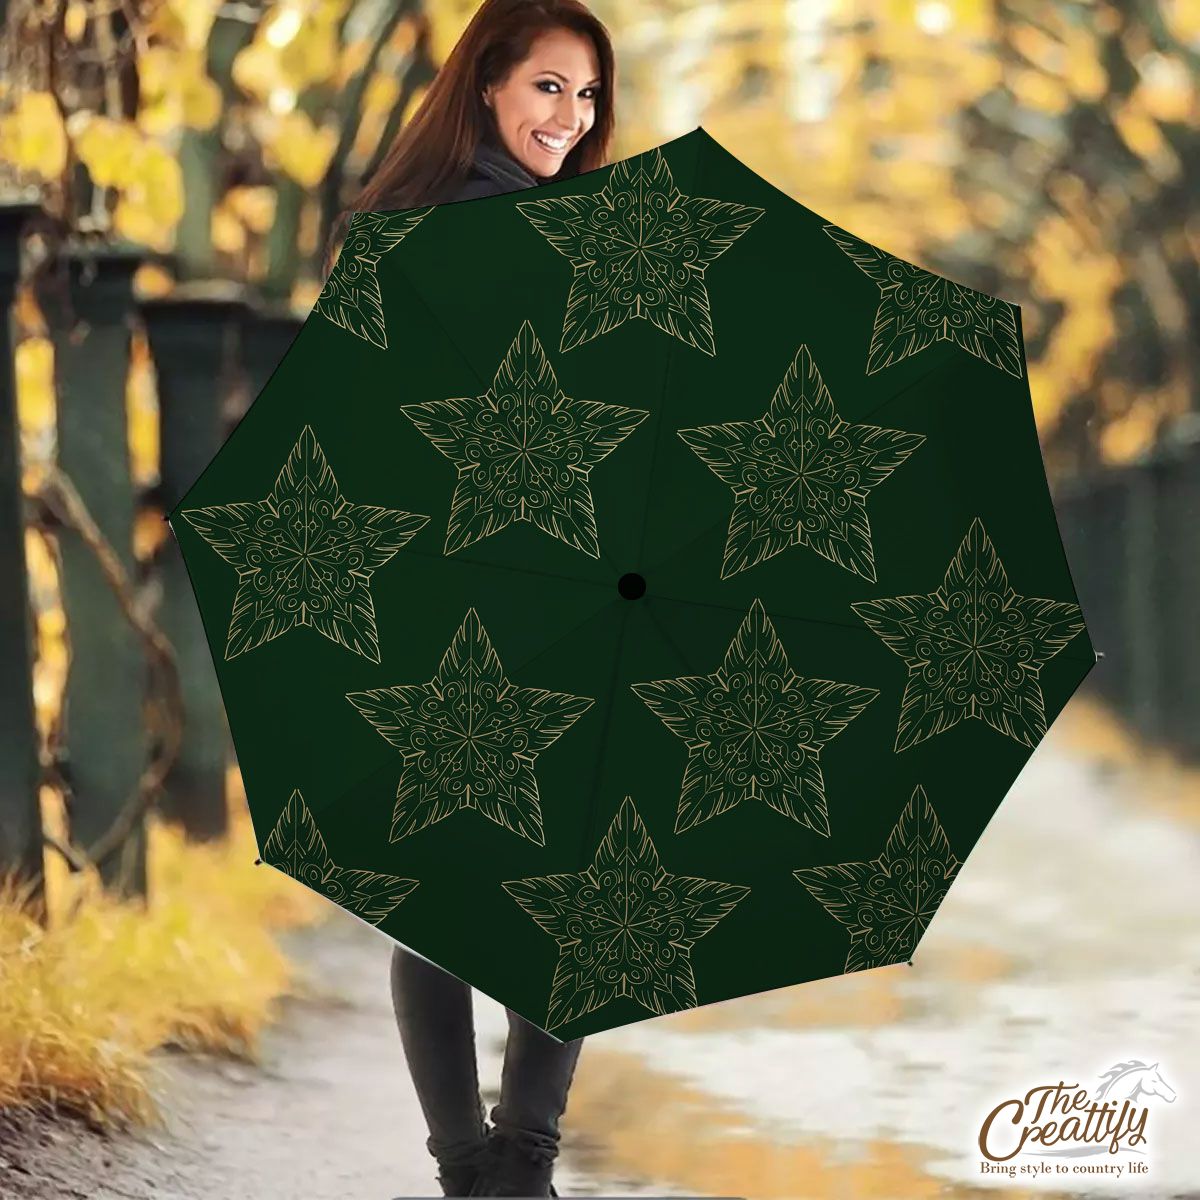 Gold And Green Christmas Star Umbrella